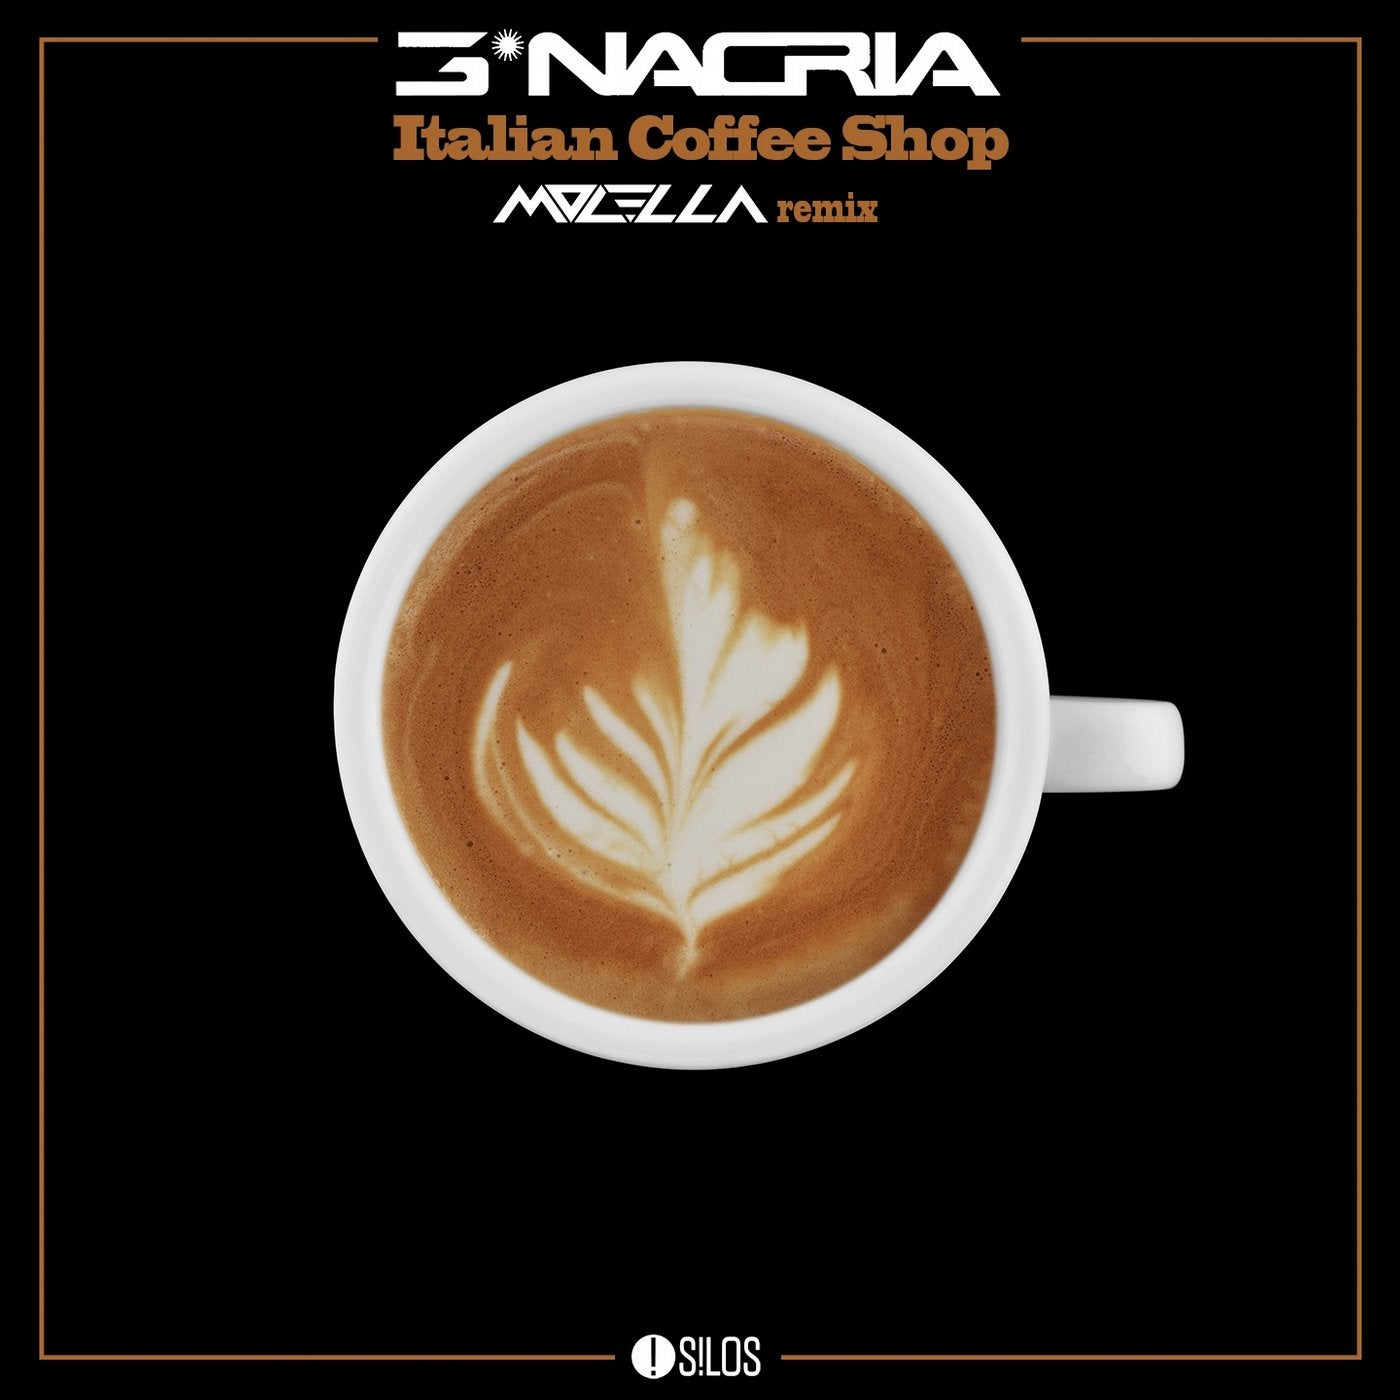 Italian Coffee Shop (Molella Remix)